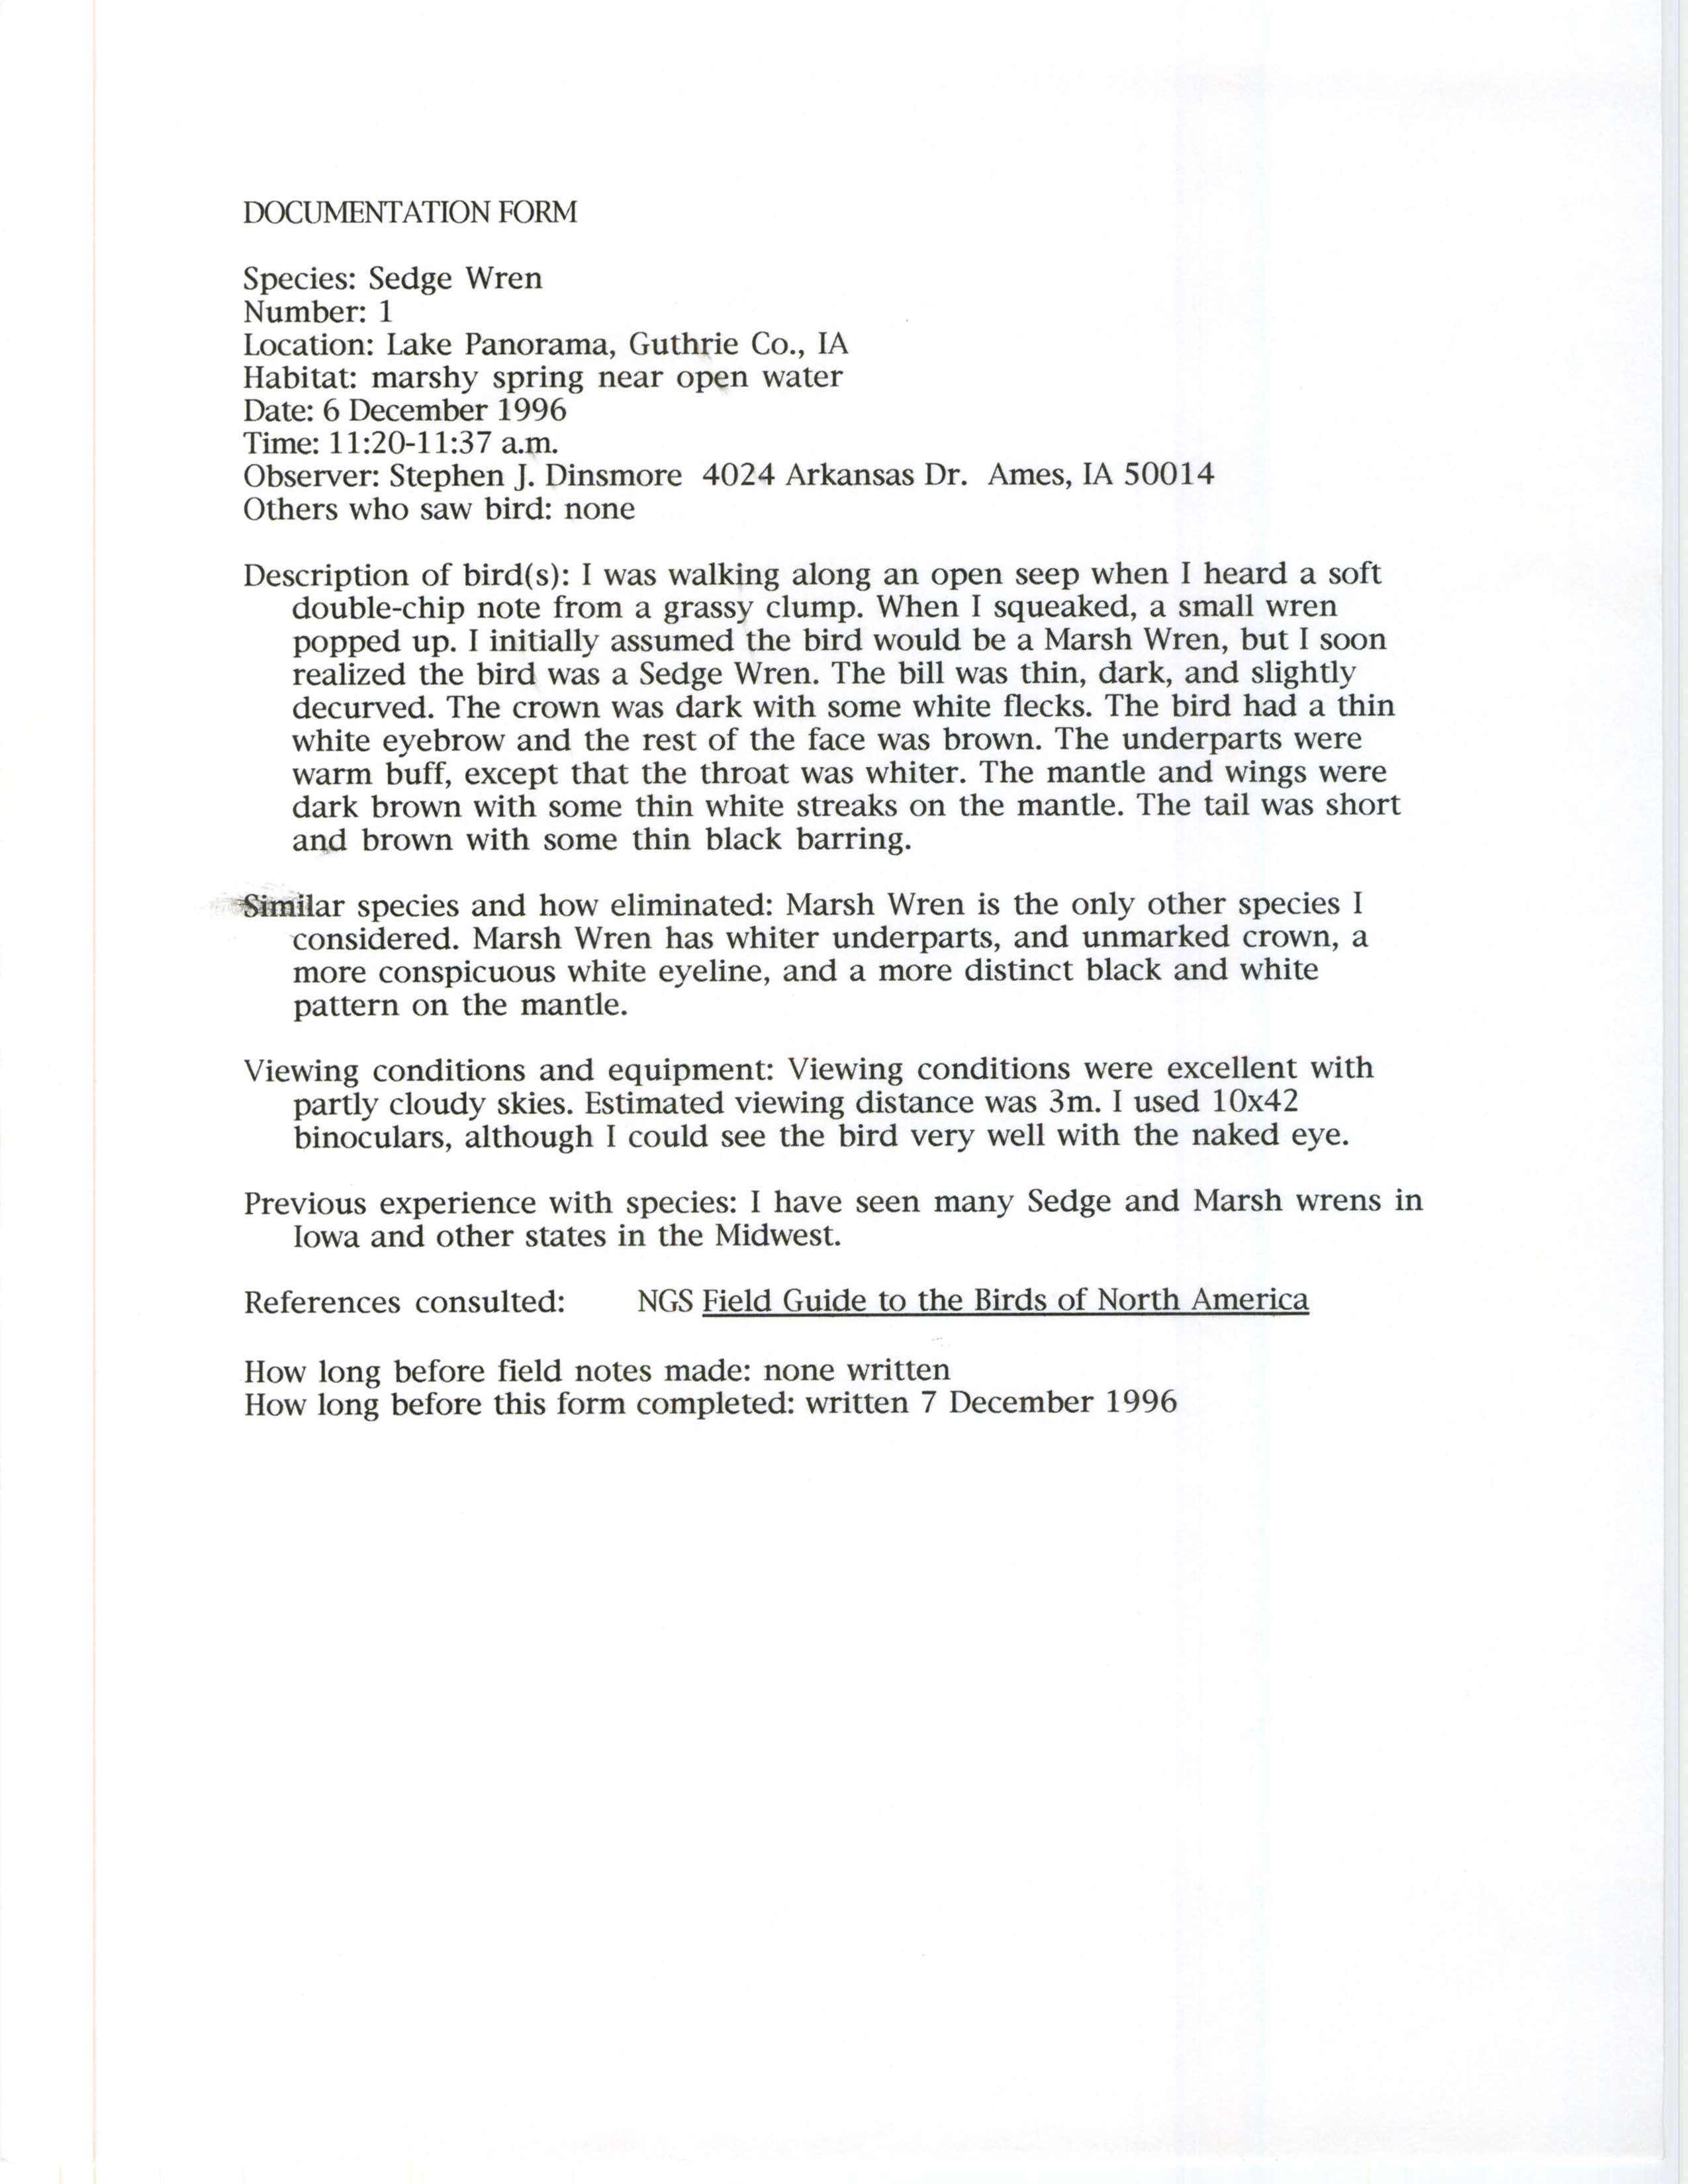 Rare bird documentation form for Sedge Wren at Lake Panorama (water body), 1996